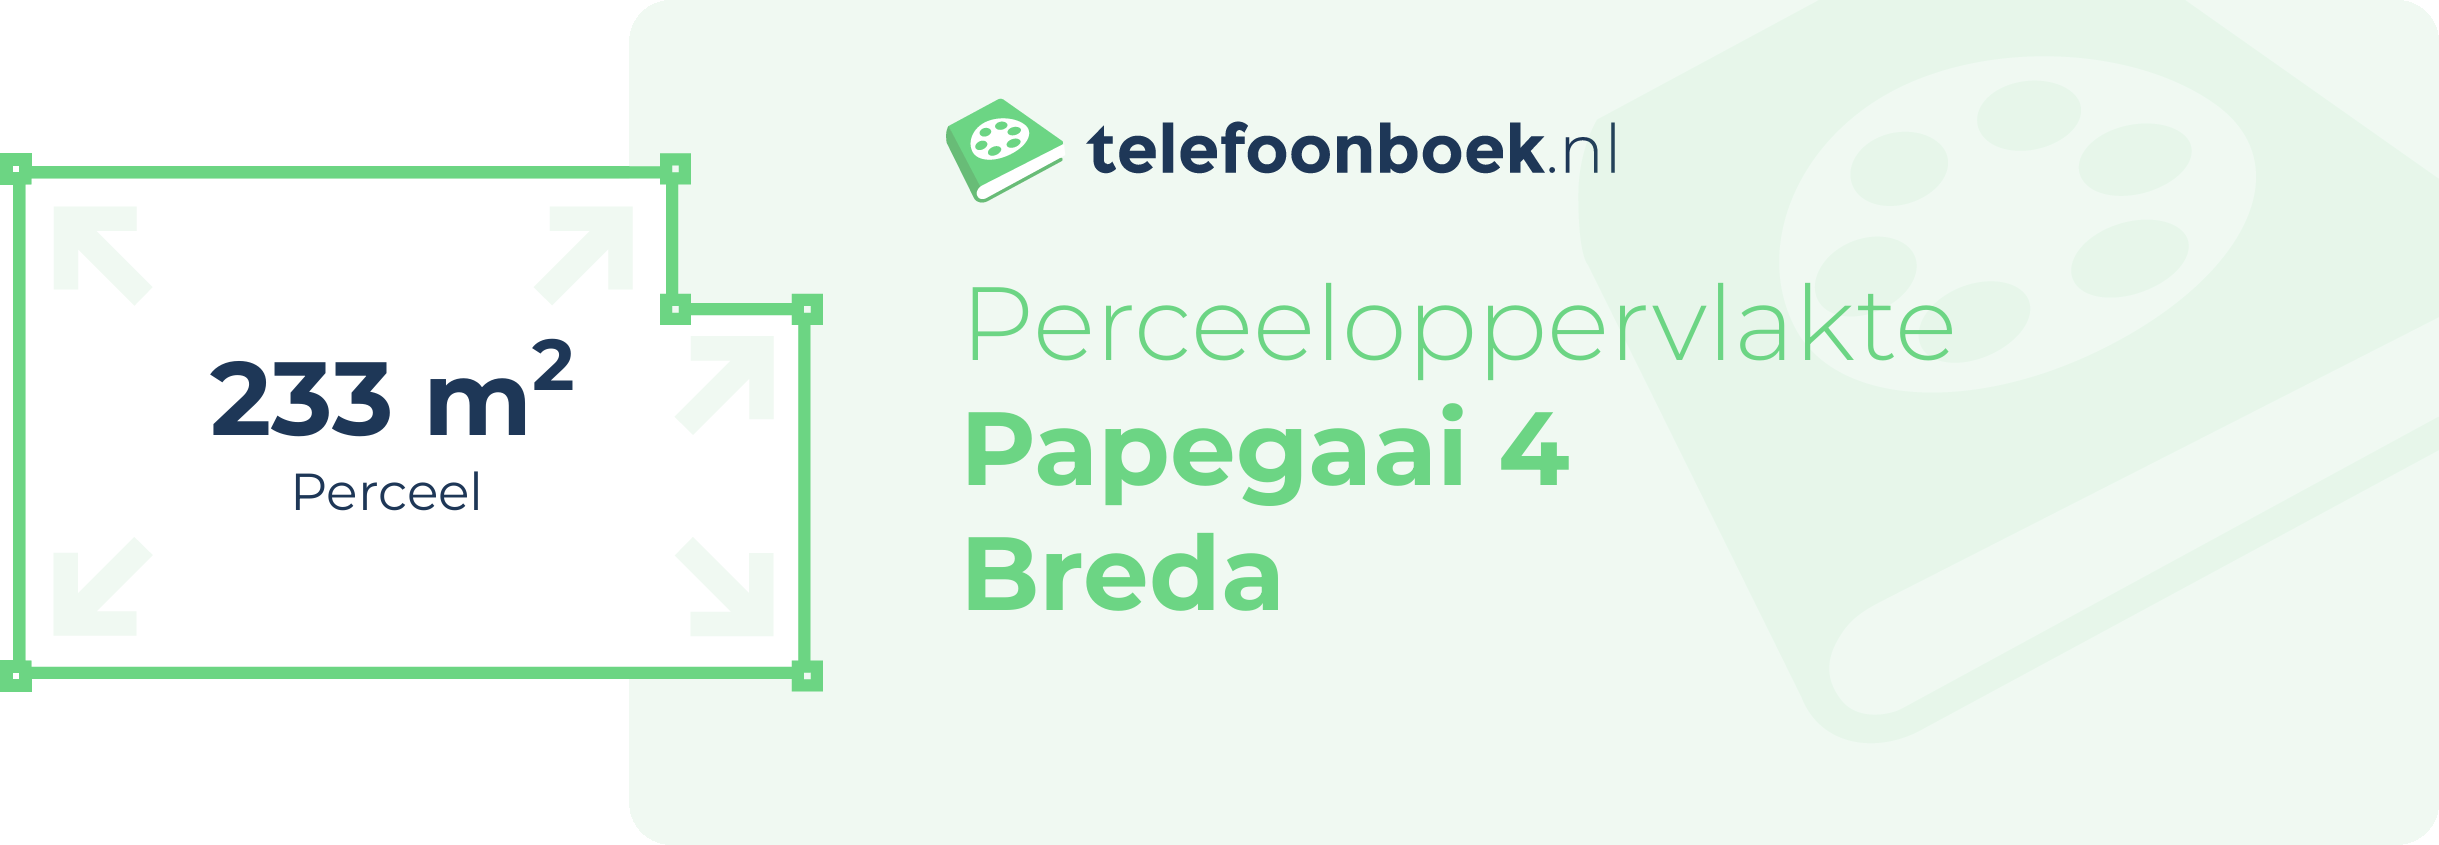 Perceeloppervlakte Papegaai 4 Breda